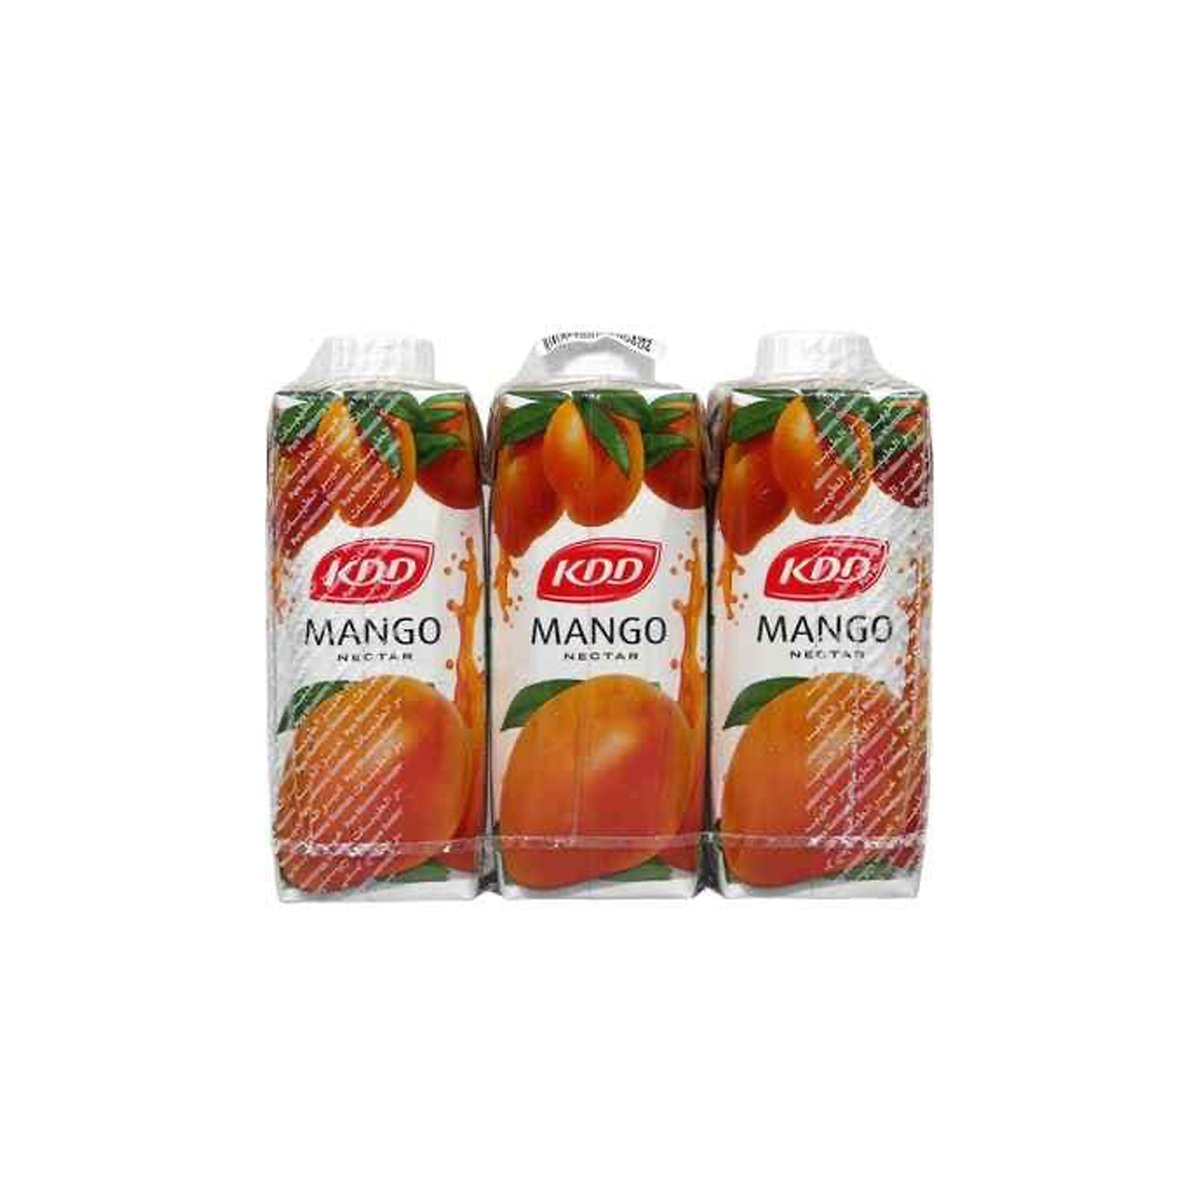 KDD Mango Nectar 6 x 250ml